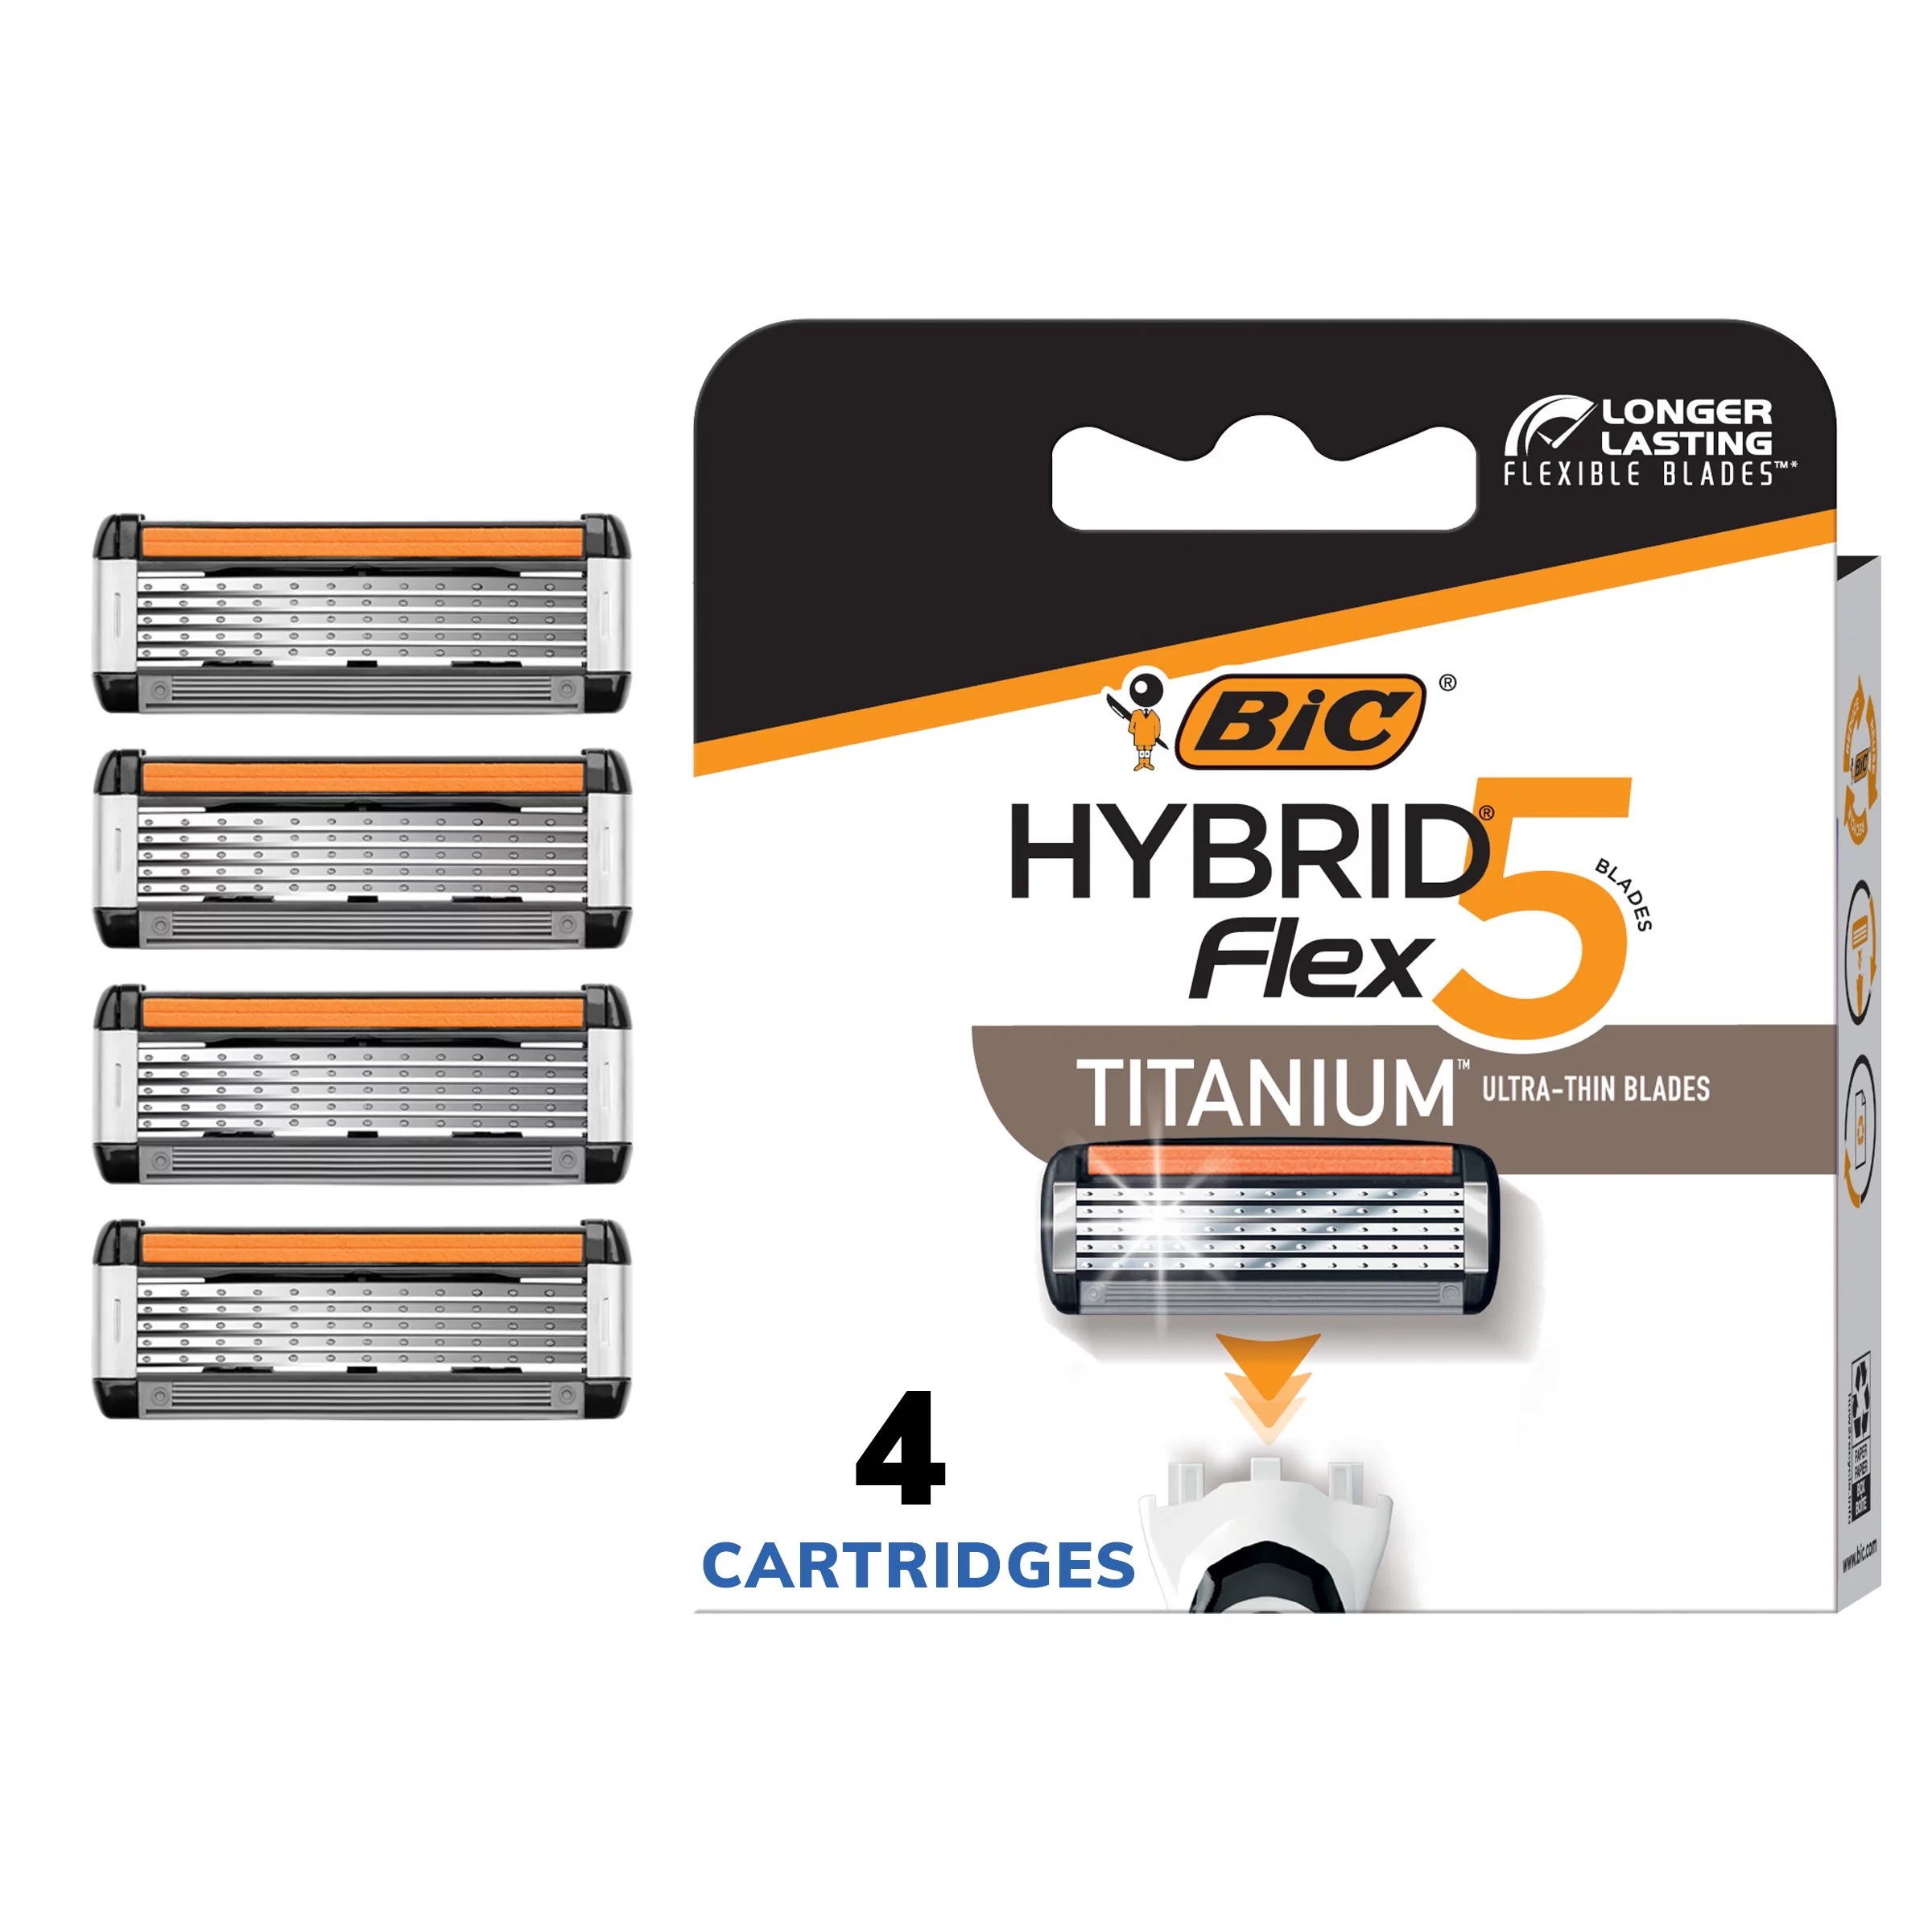 BIC Flex 5 Hybrid Titanium Men's Disposable Razor Cartridges, 5 Blade, Includes 4 Cartridges